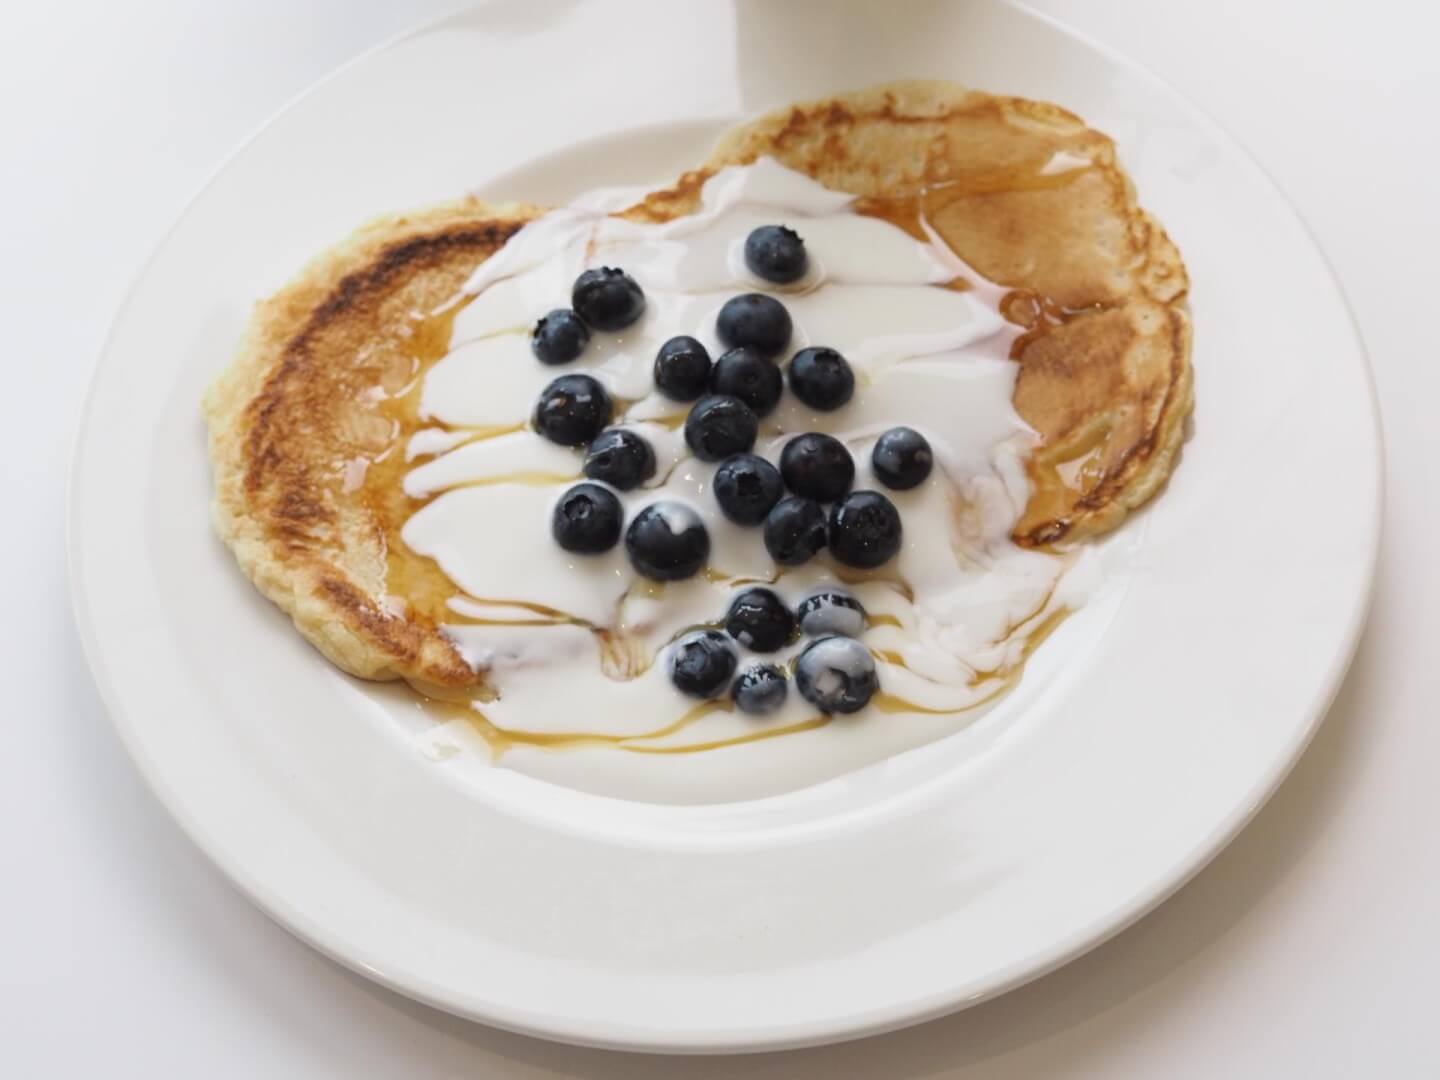 Arla Choose Goodness: Sunday Pancakes